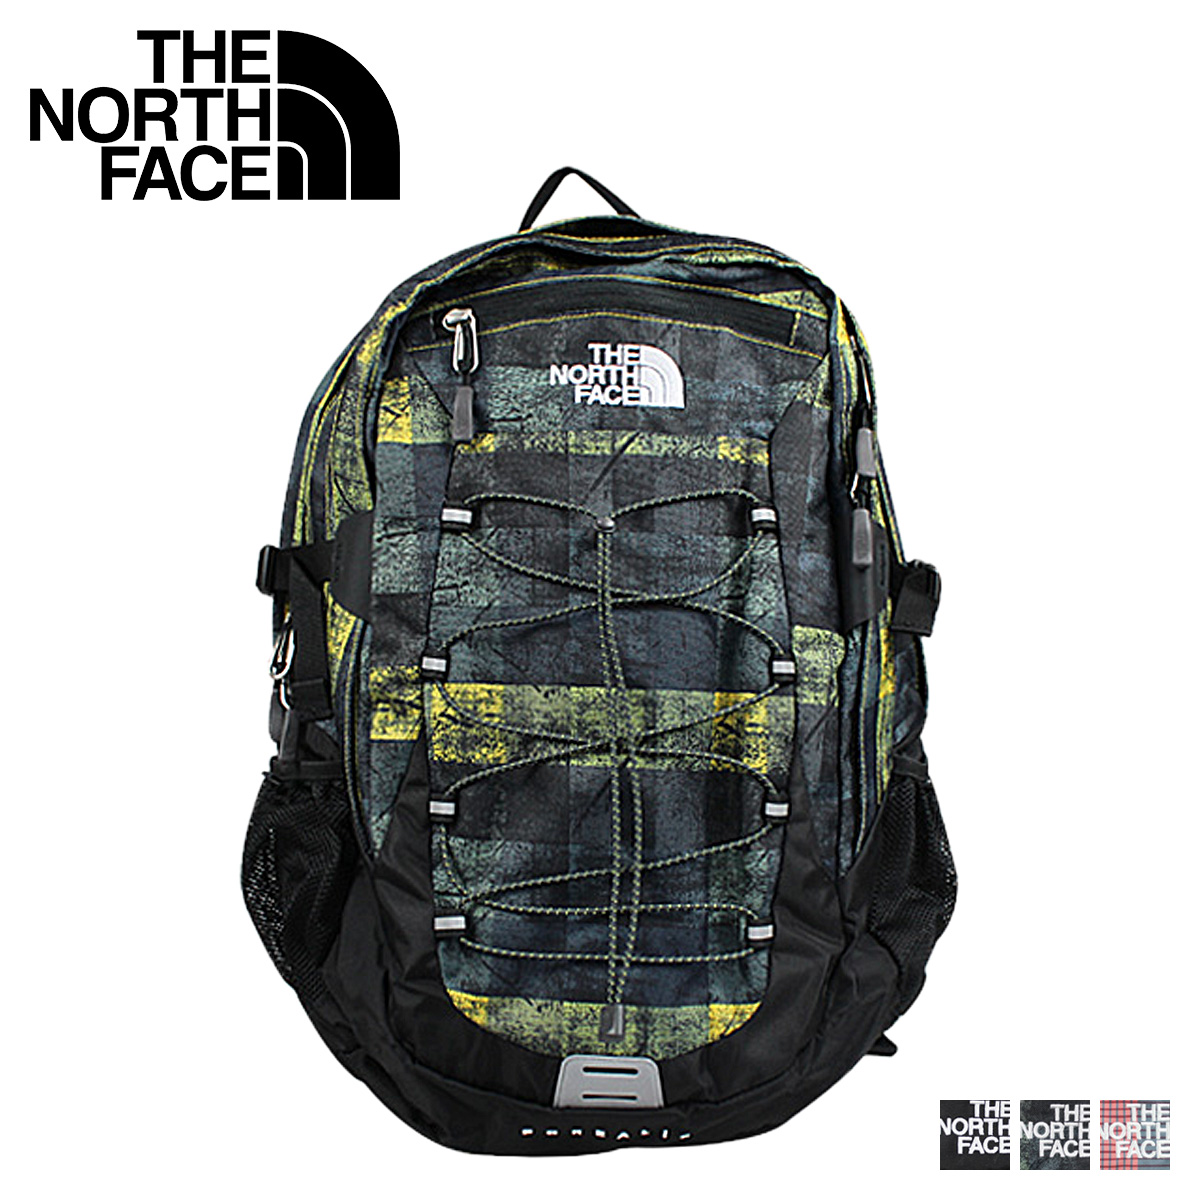 NORTH FACE backpack rucksack 